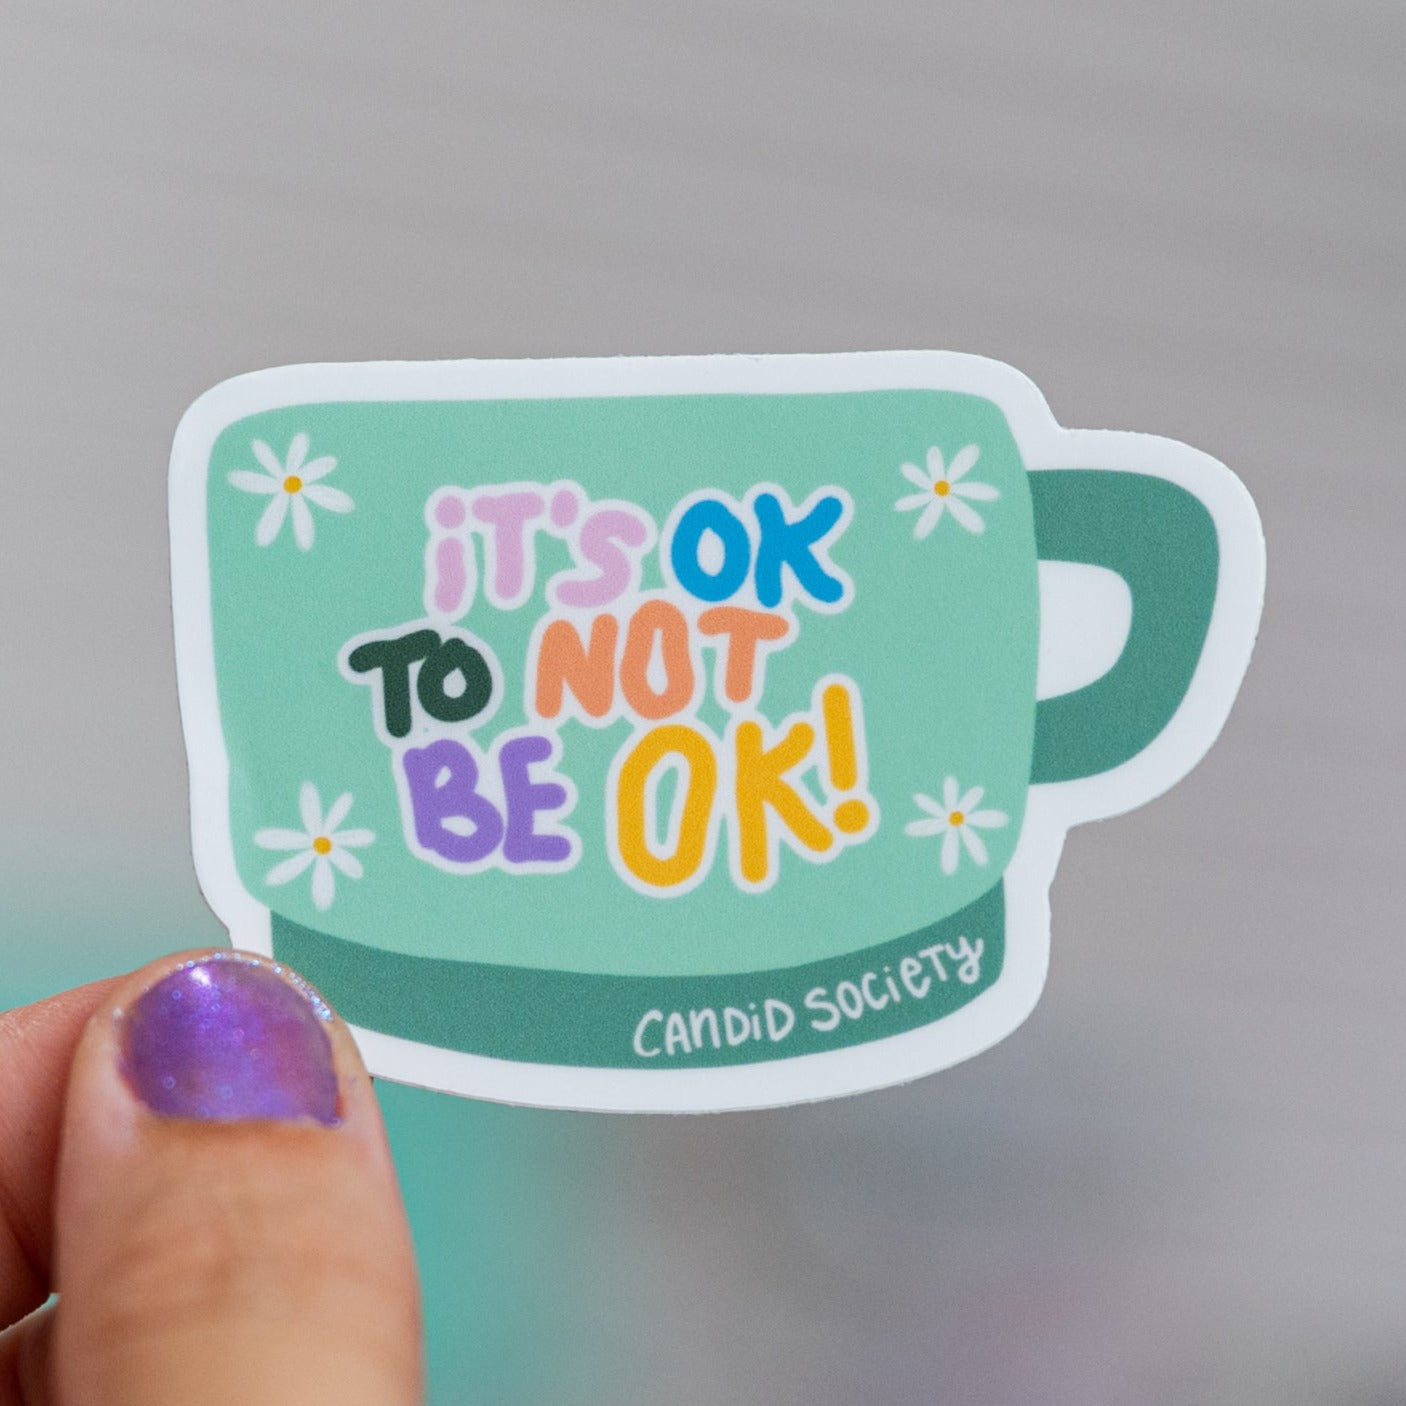 110 - It's OK to not be OK! - Premium Sticker